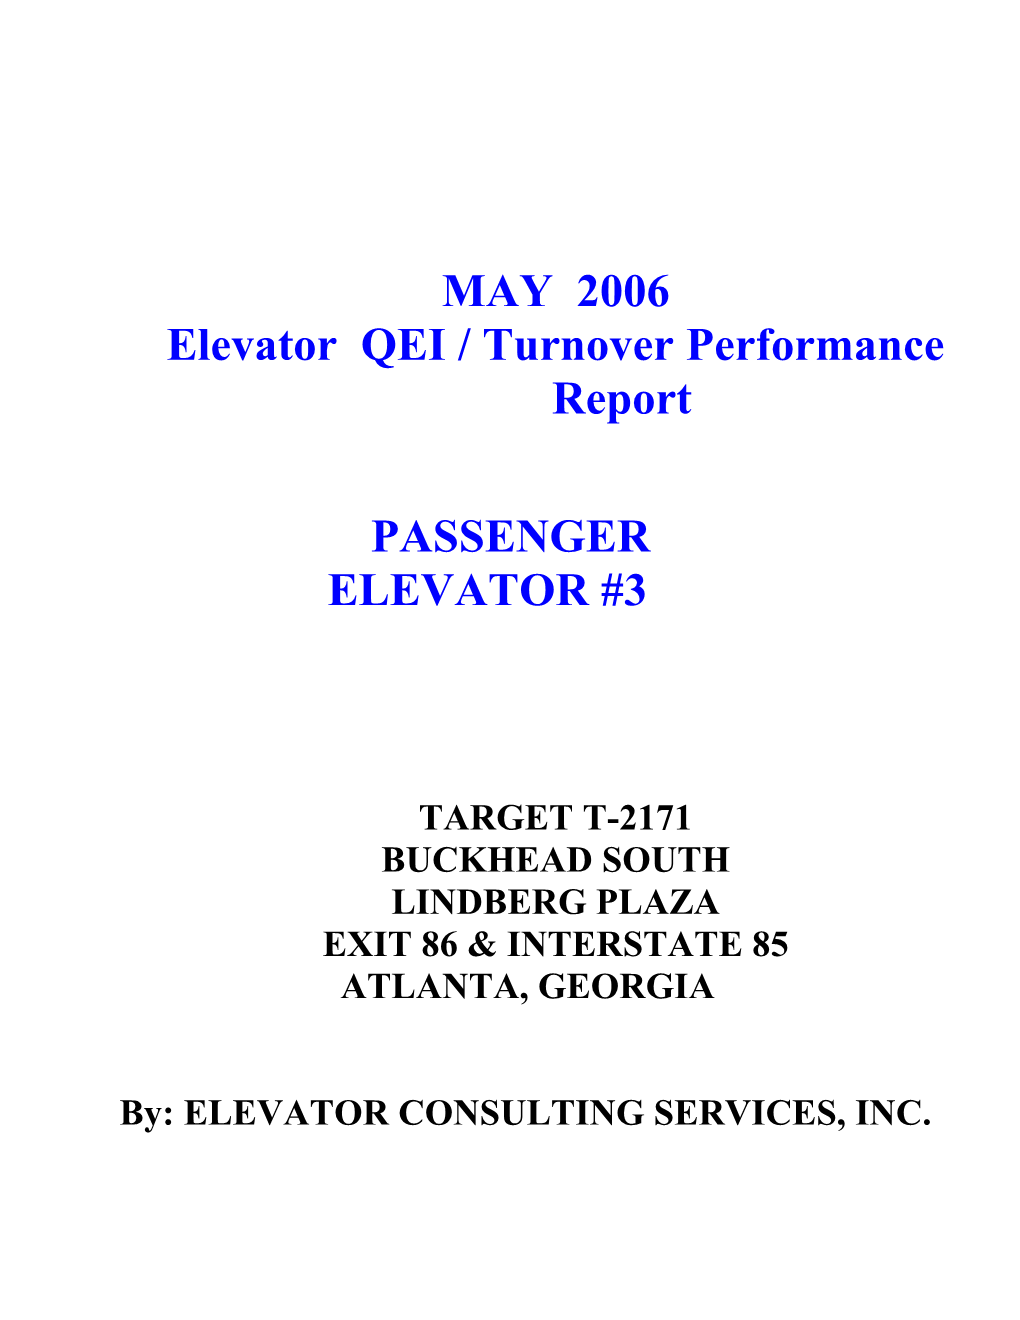 Elevator QEI / Turnover Performance Report